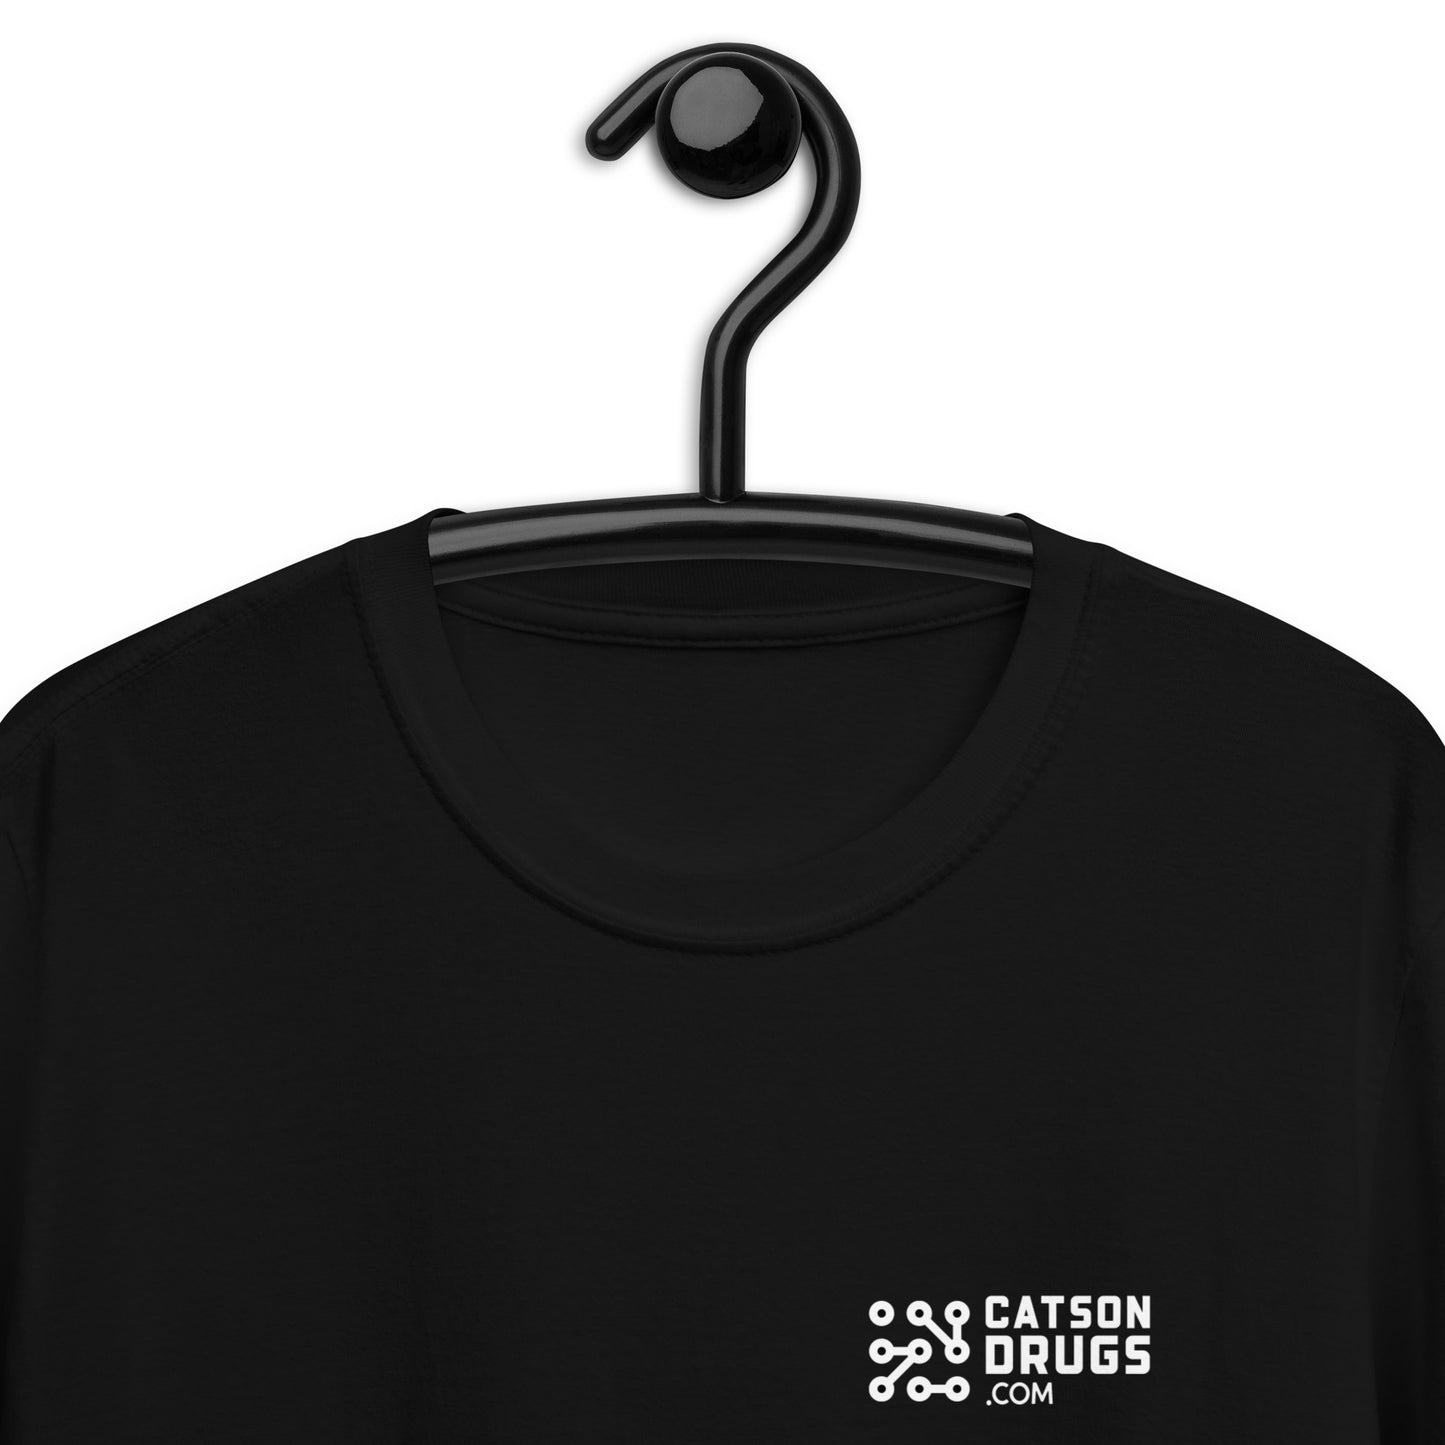 Techno Cat - Unisex T-Shirt